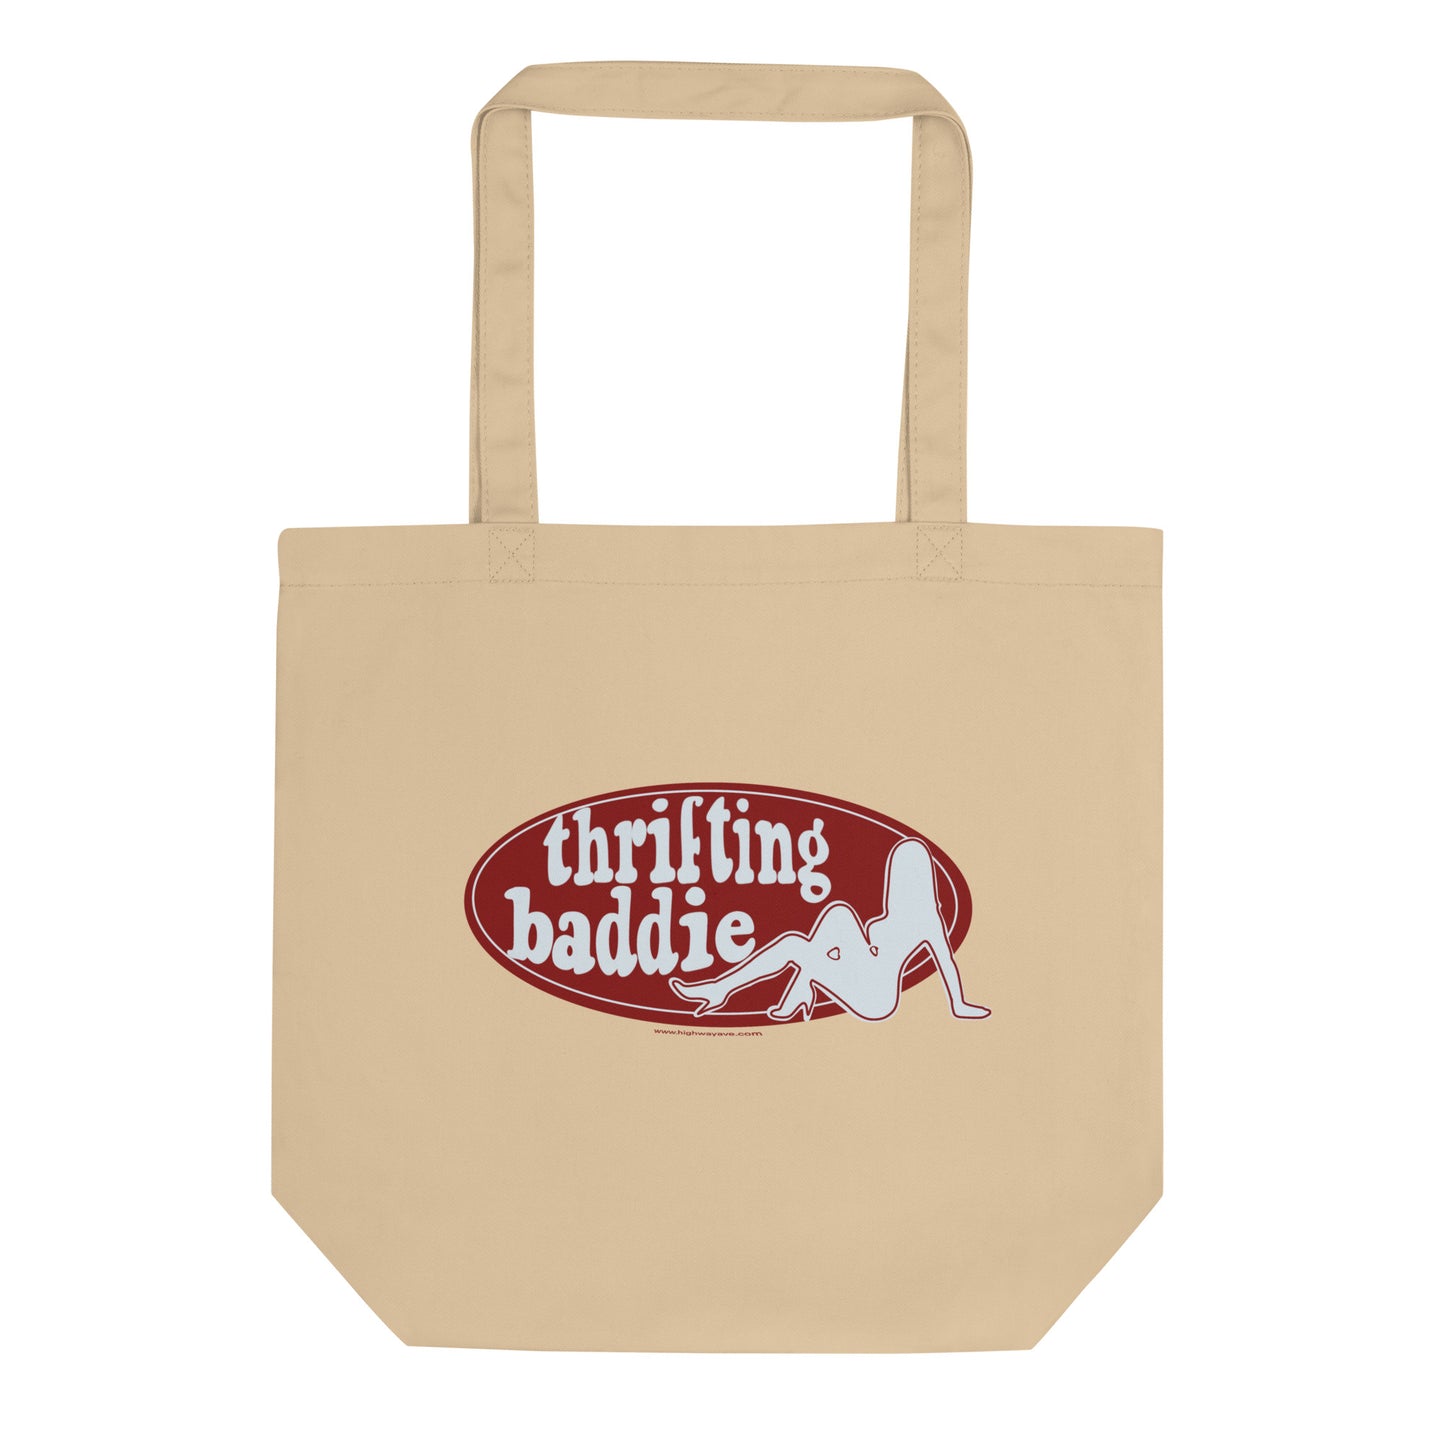 'thrifting baddie' tote bag